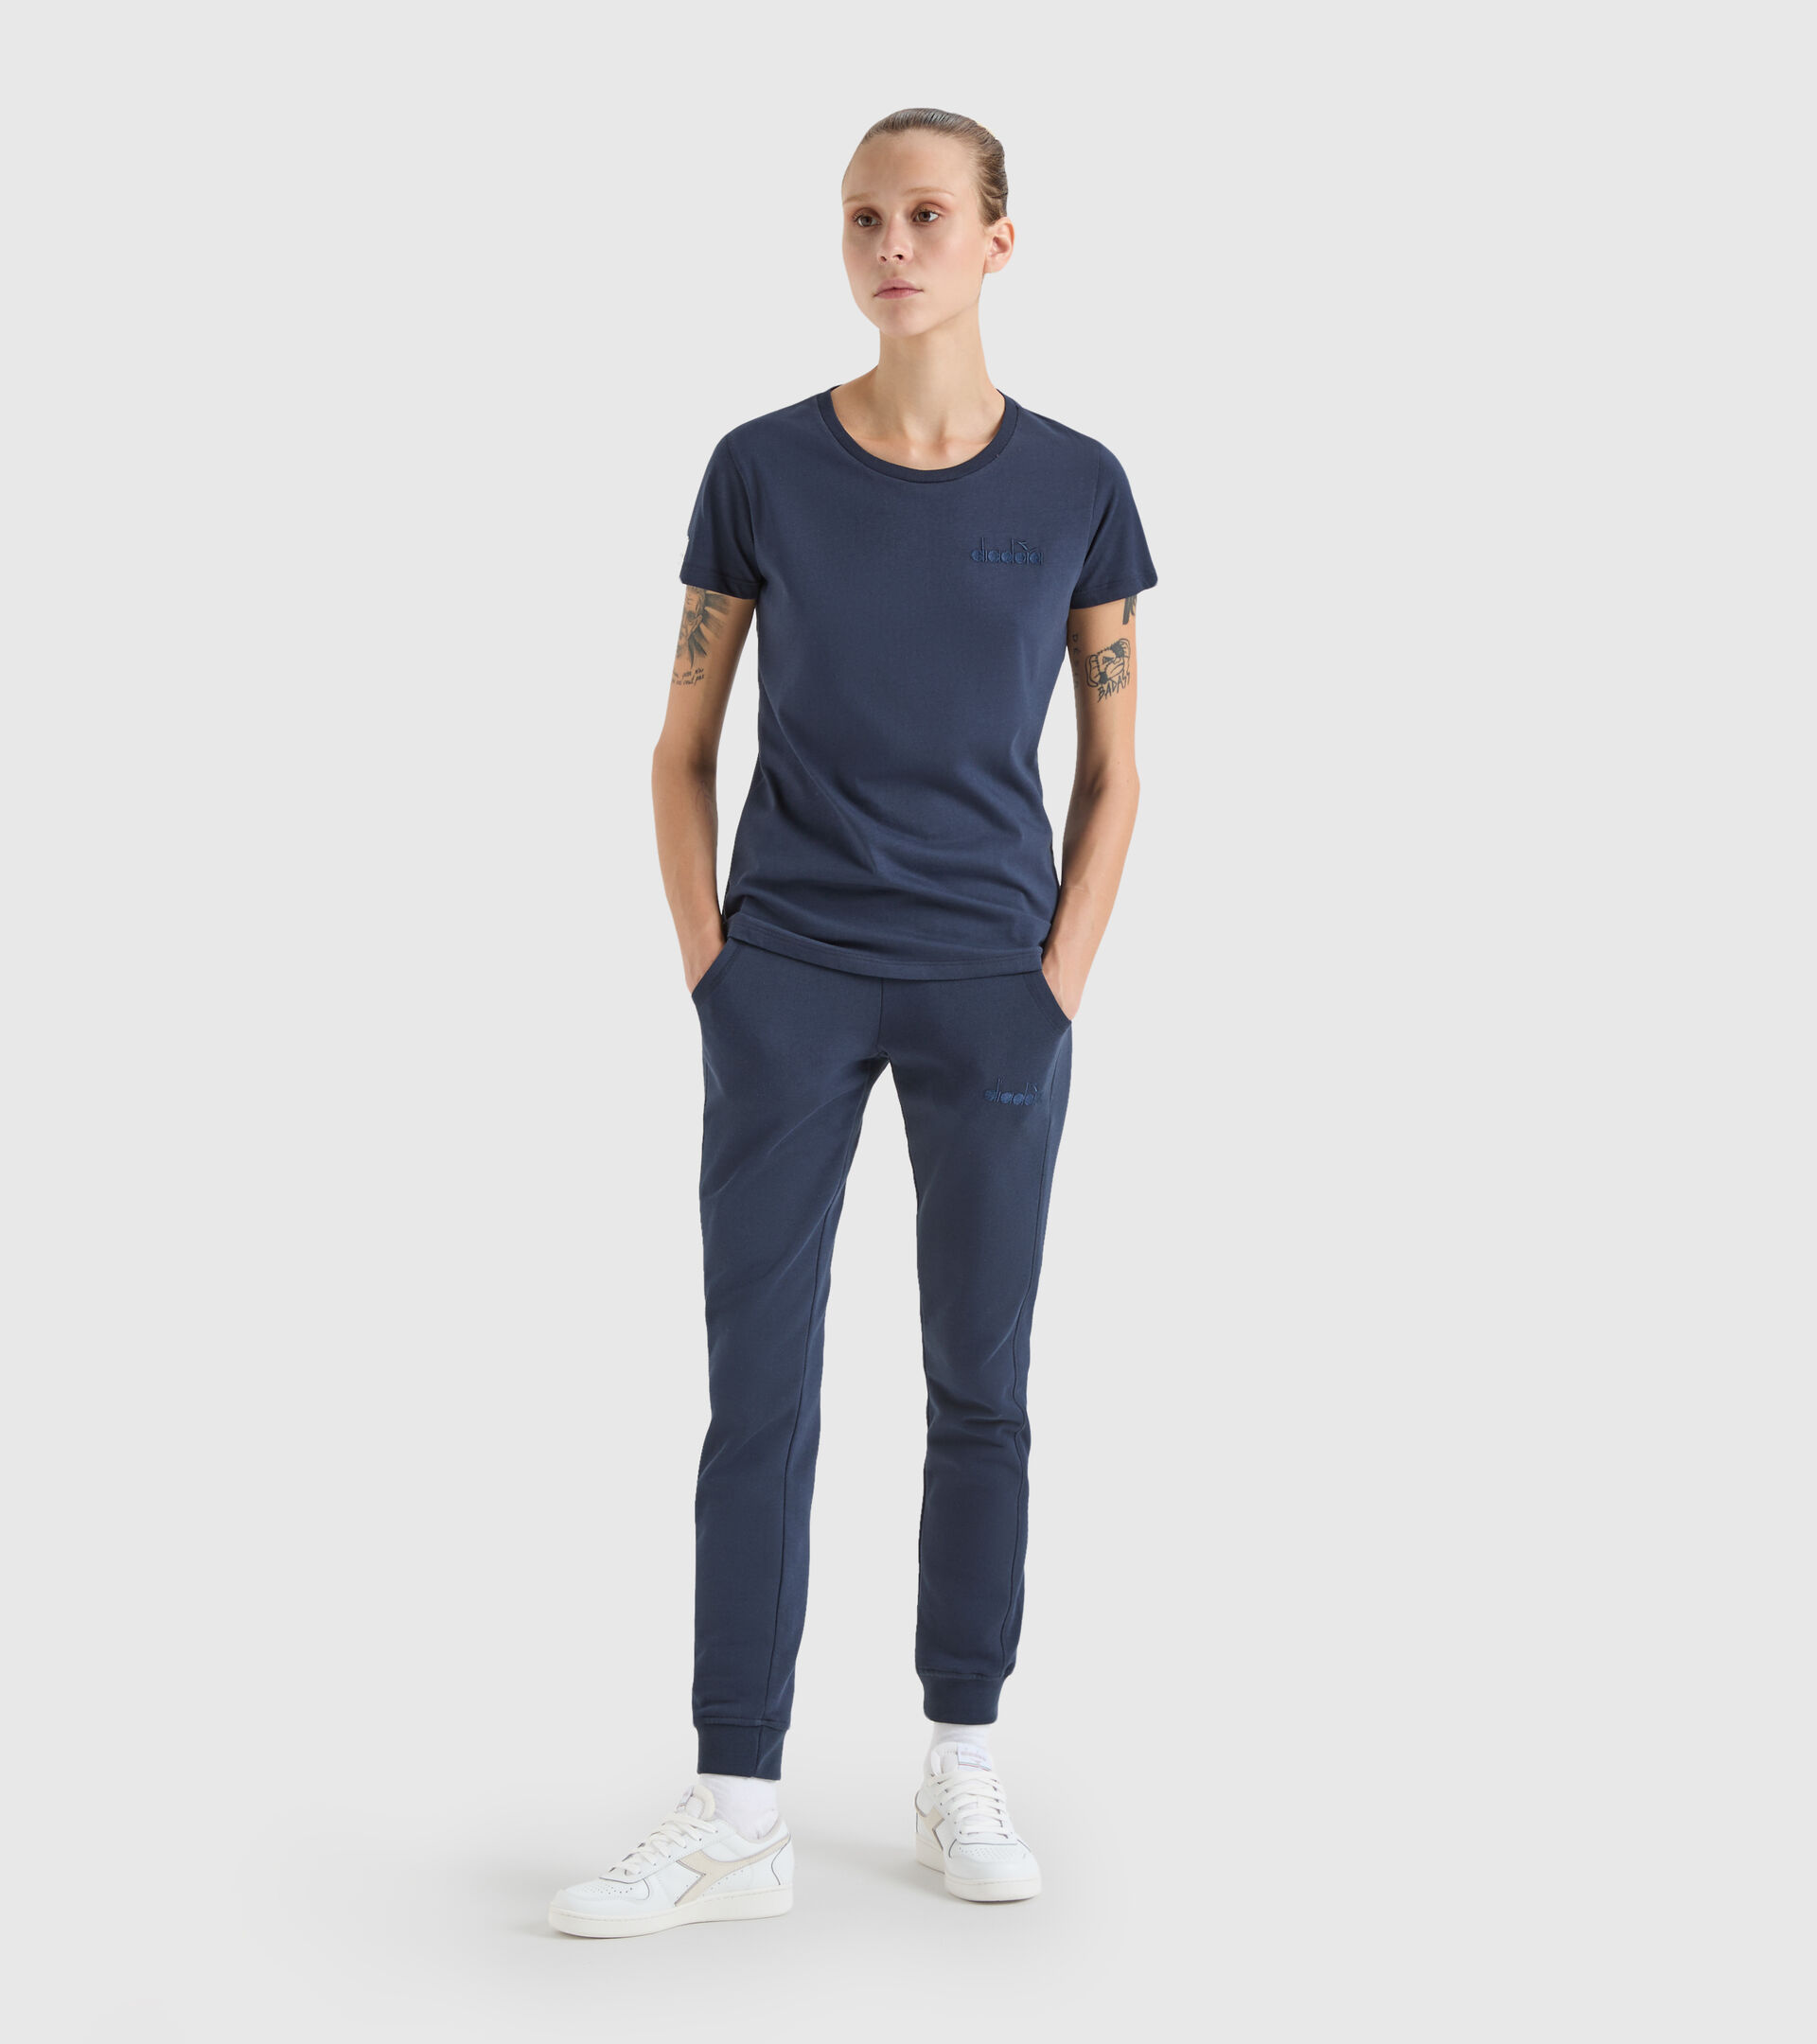 Cotton T-shirt - Made in Italy - Women L. T-SHIRT SS MII BLUE CORSAIR - Diadora